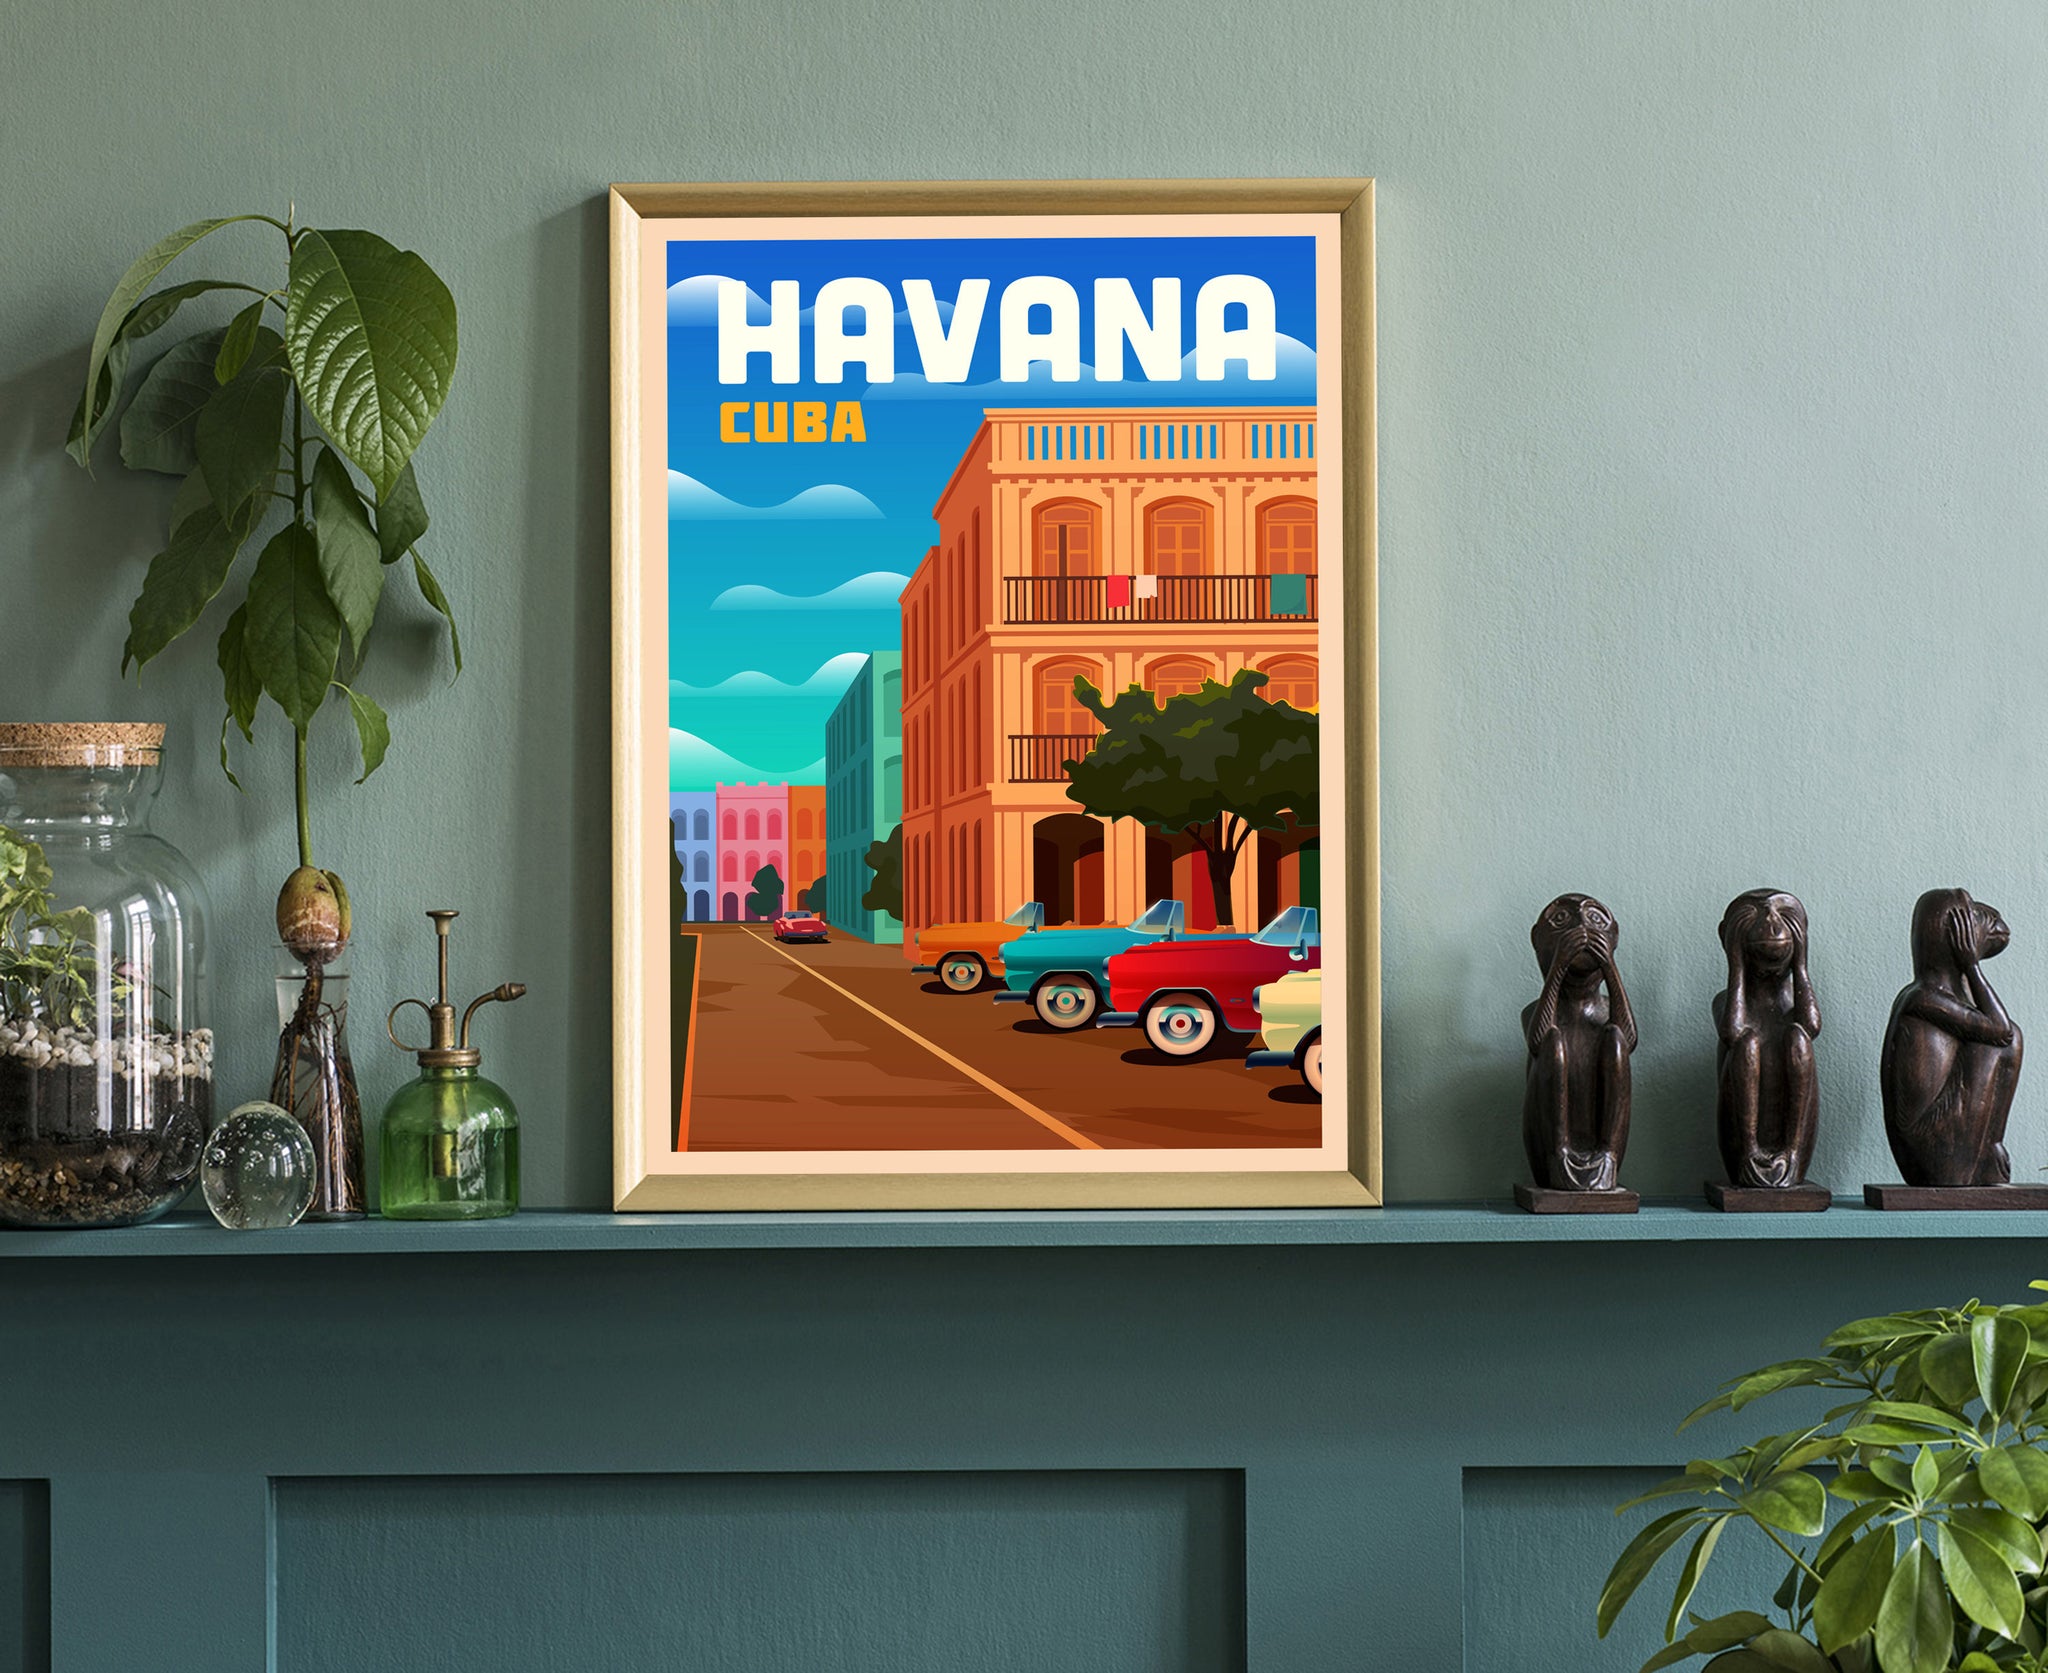 HAVANA TRAVEL POSTER, Cuba Havana poster print wall art, Havana cityscape and landmark poster, Home wall art, Office wall decorations